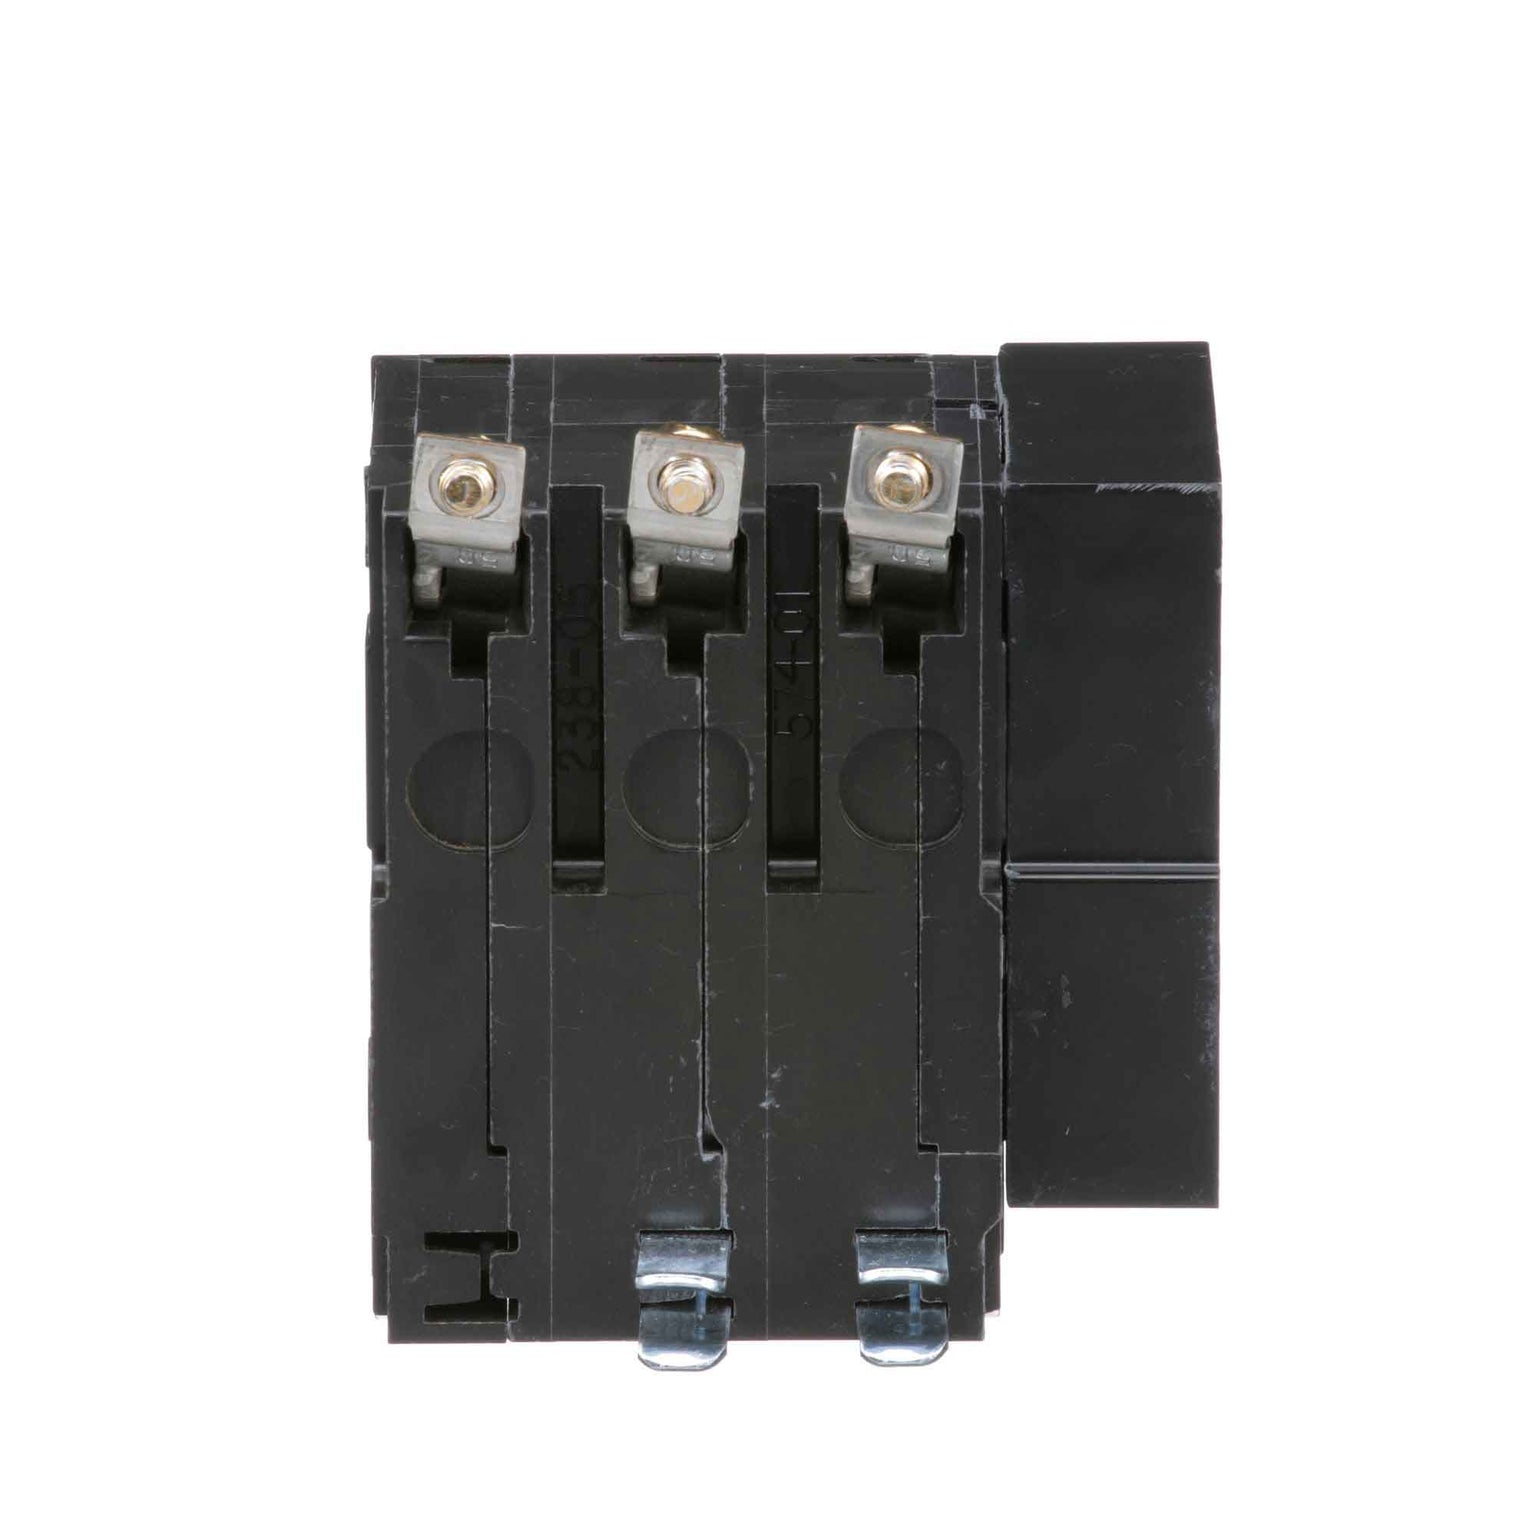 QOB3501021 - Square D - Molded Case Circuit Breaker